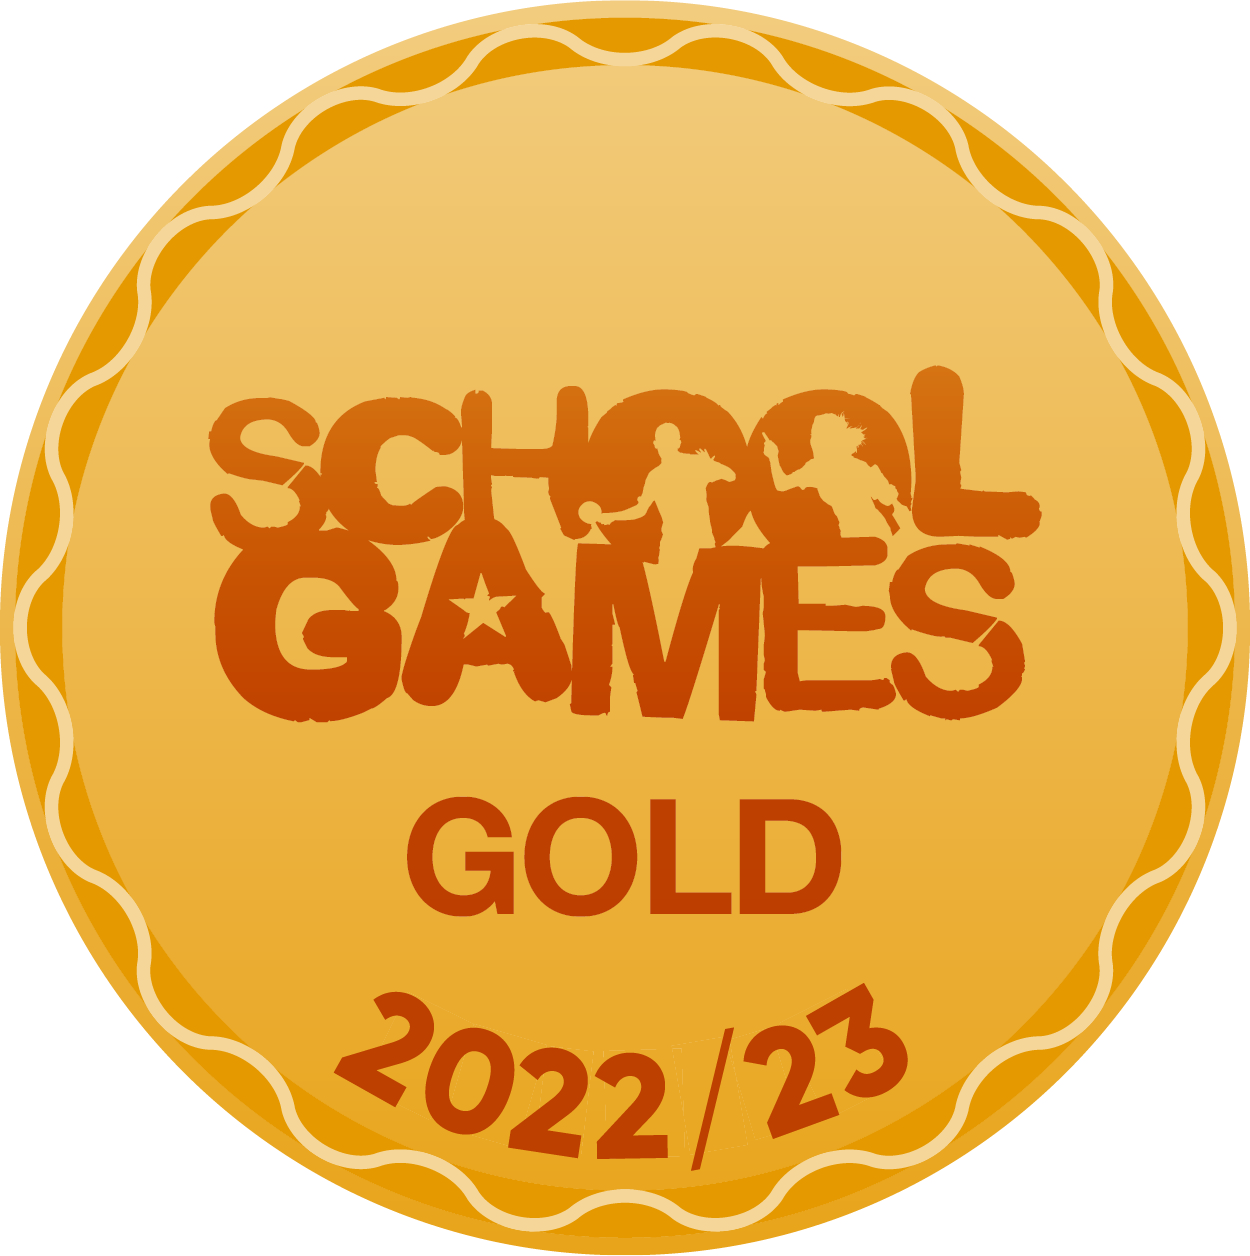 School Games Gold Award Logo 2021 22